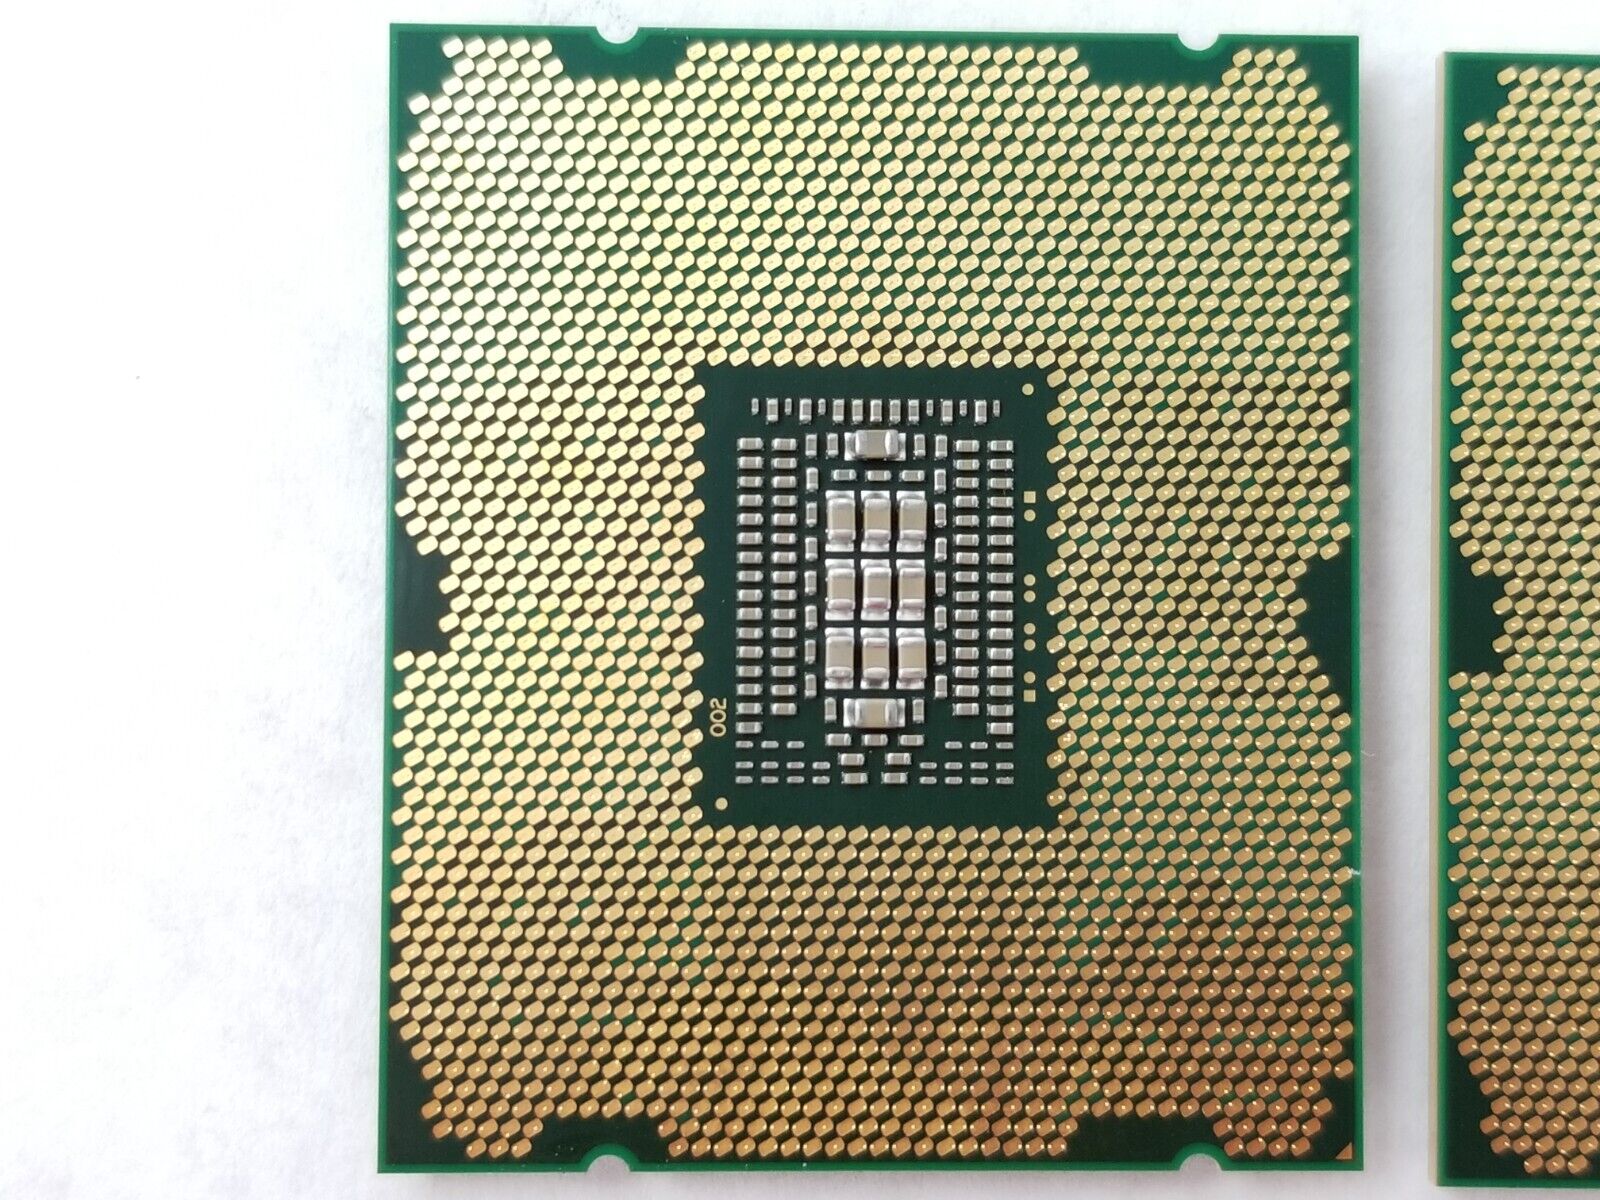 Matching Pair Intel Xeon E5-2680 SR0KH 2.70GHz 8-Core LGA2011 CPU Processor